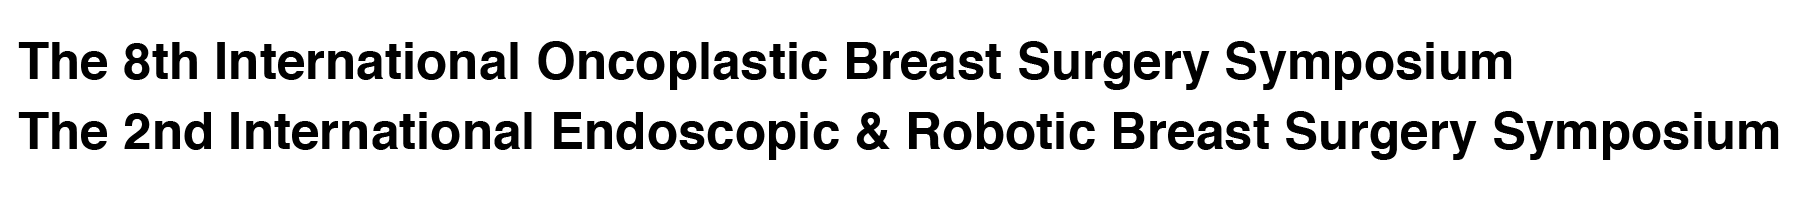 The 8th International Oncoplastic Breast Surgery Symposium / The 2nd International Endoscopic & Robotic Breast Surgery Symposium